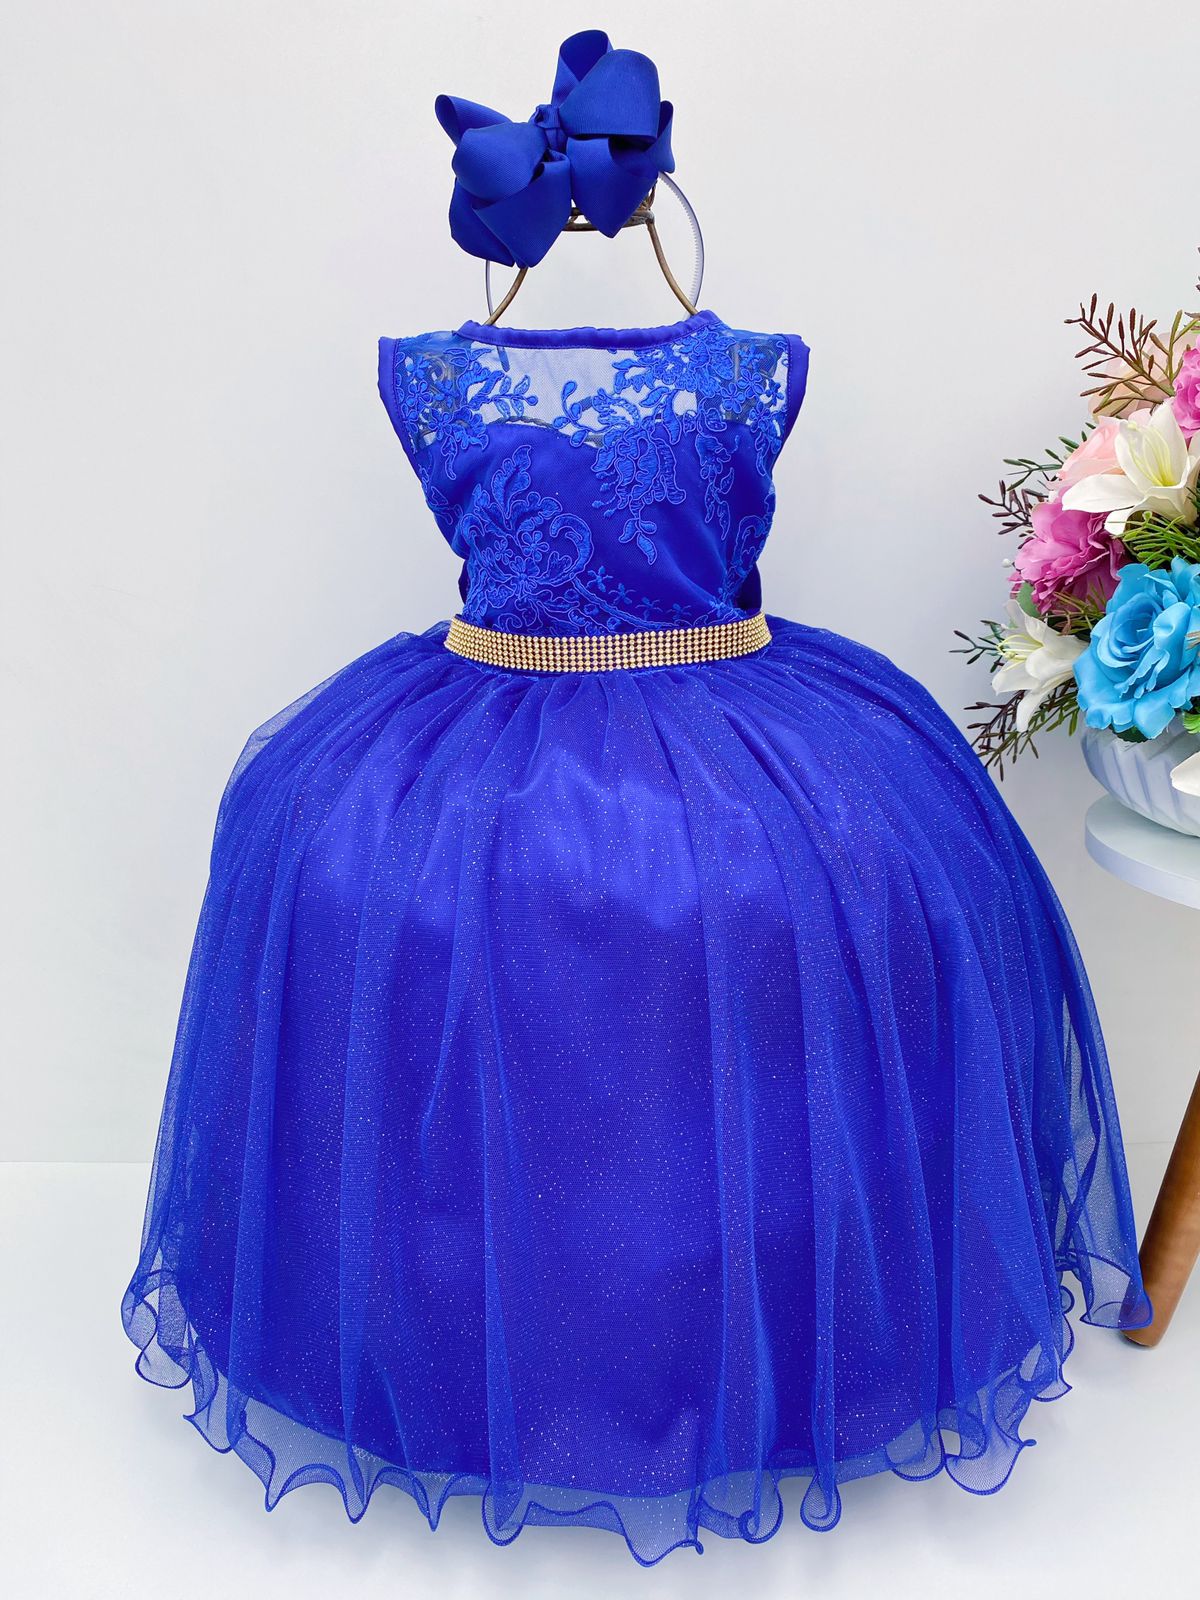 Vestido Infantil Azul Royal Renda Tule com Brilho Damas Luxo